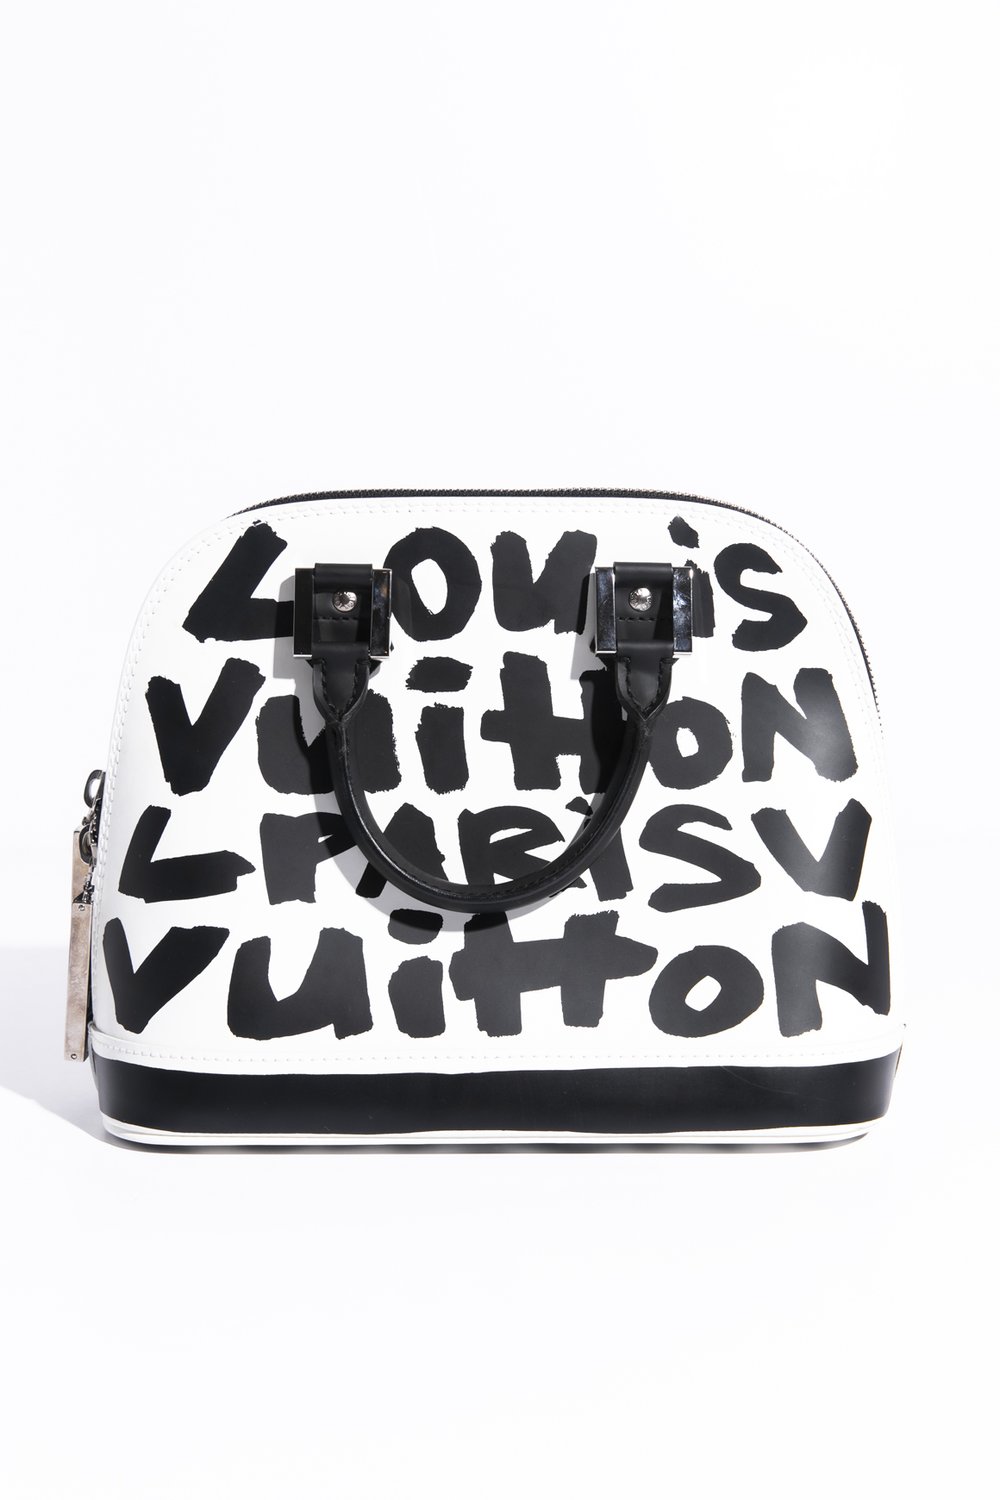 Louis Vuitton Limited Edition Graffiti Alma Bag Peach LVJP521 - Bags of  CharmBags of Charm